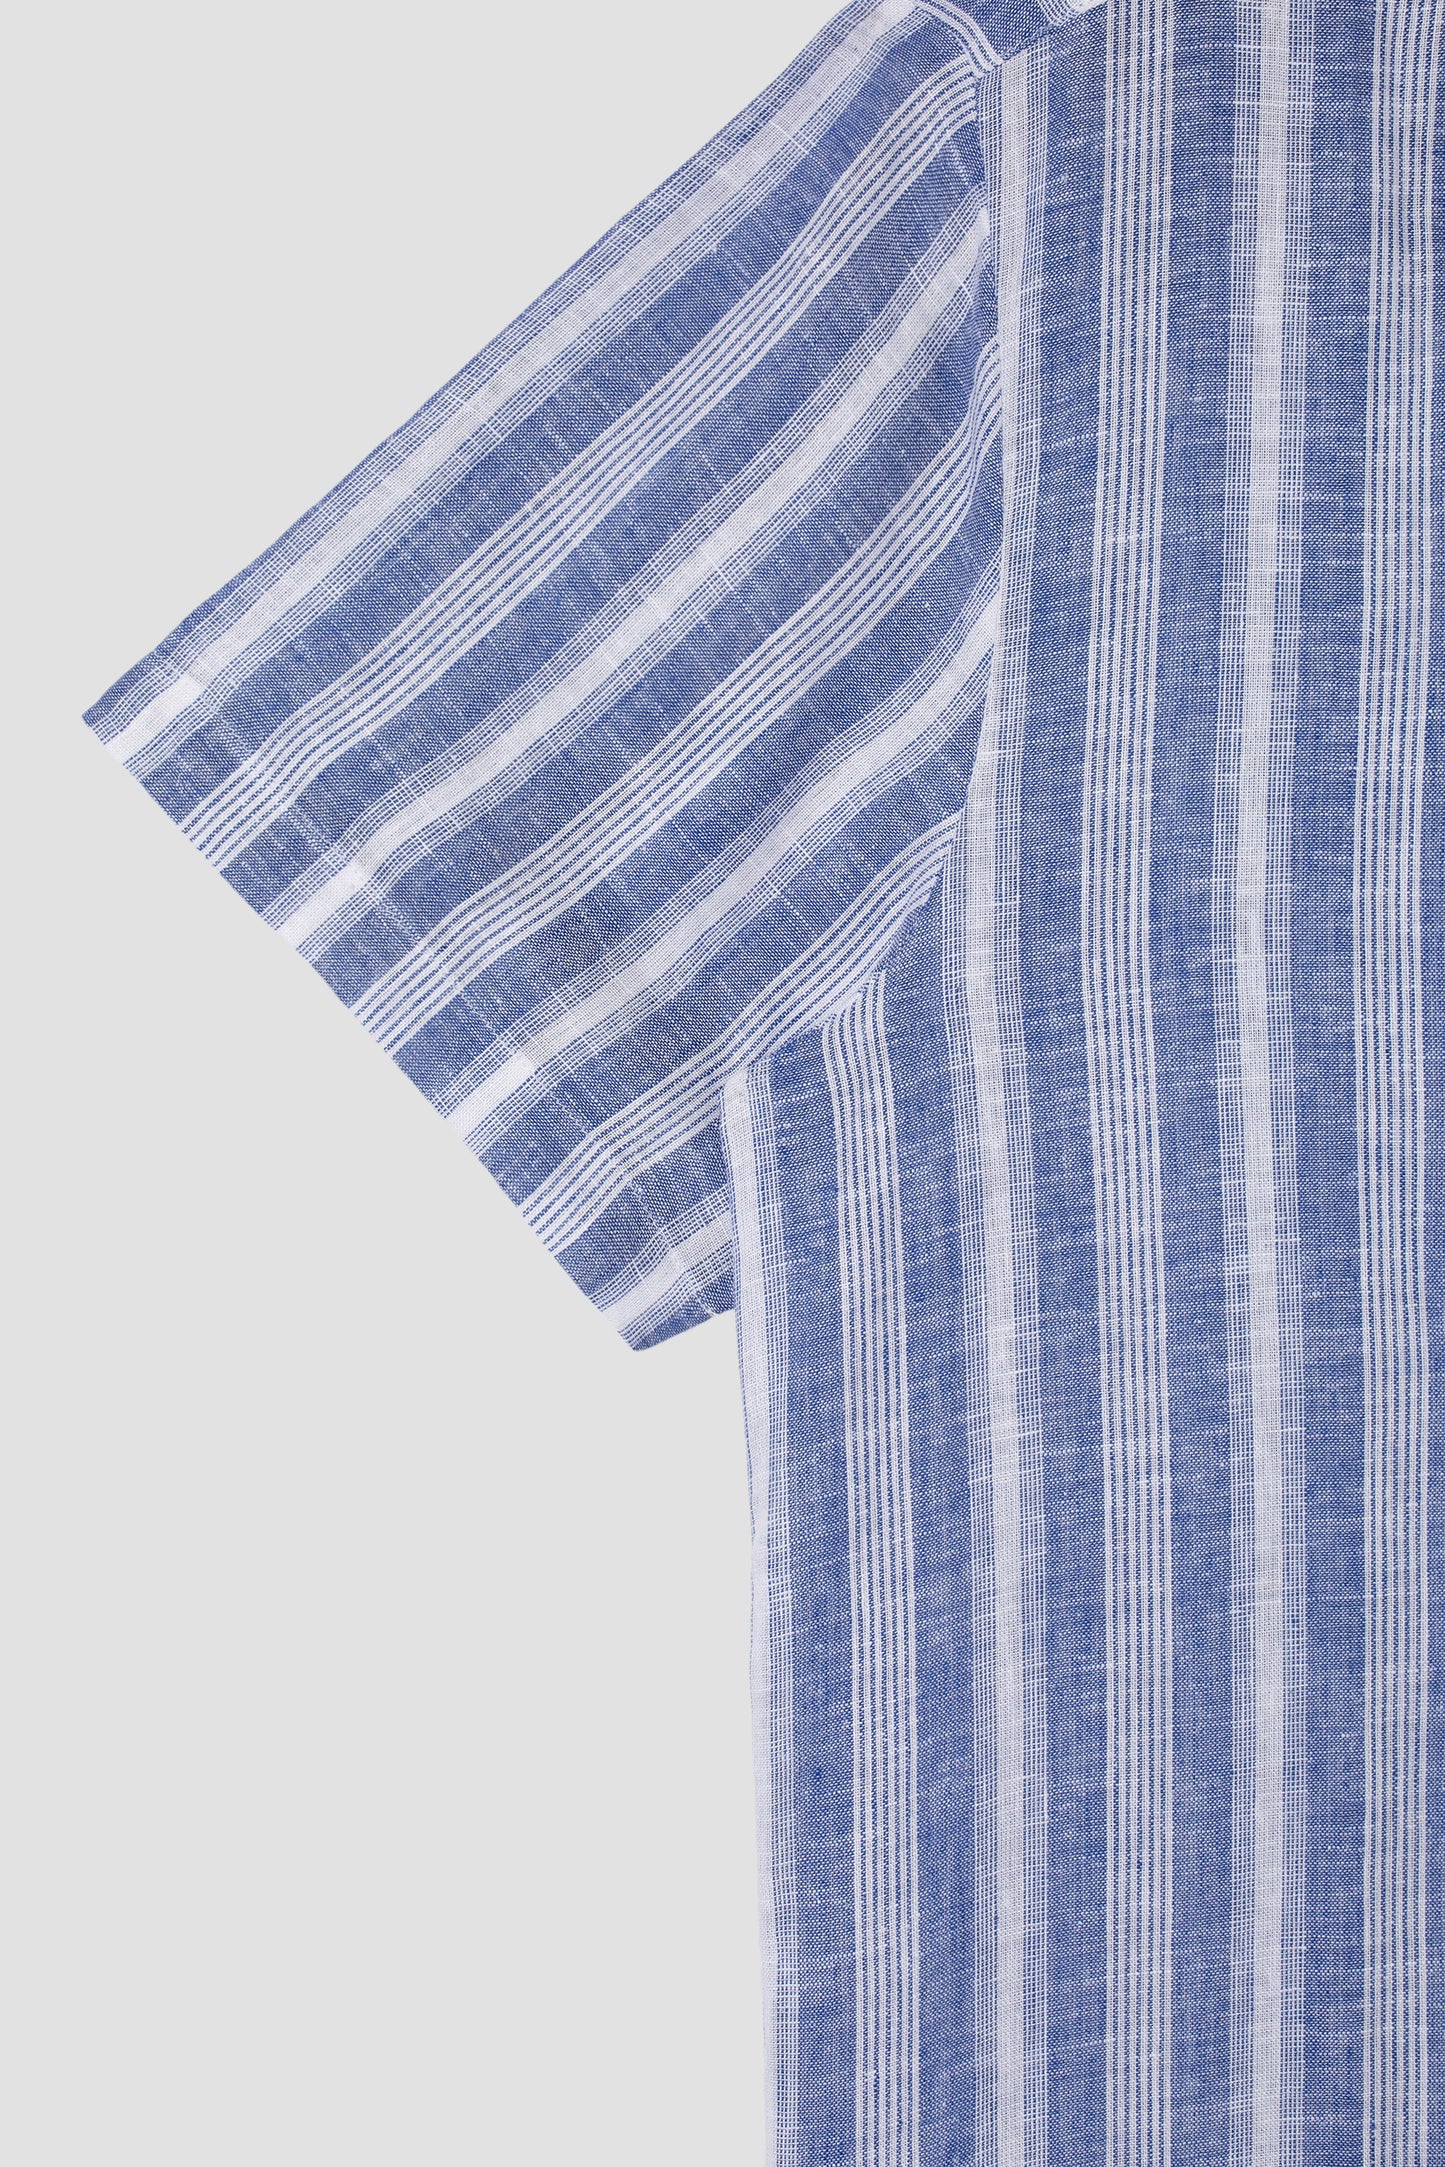 Club Shirt (Navy Multi Stripe)